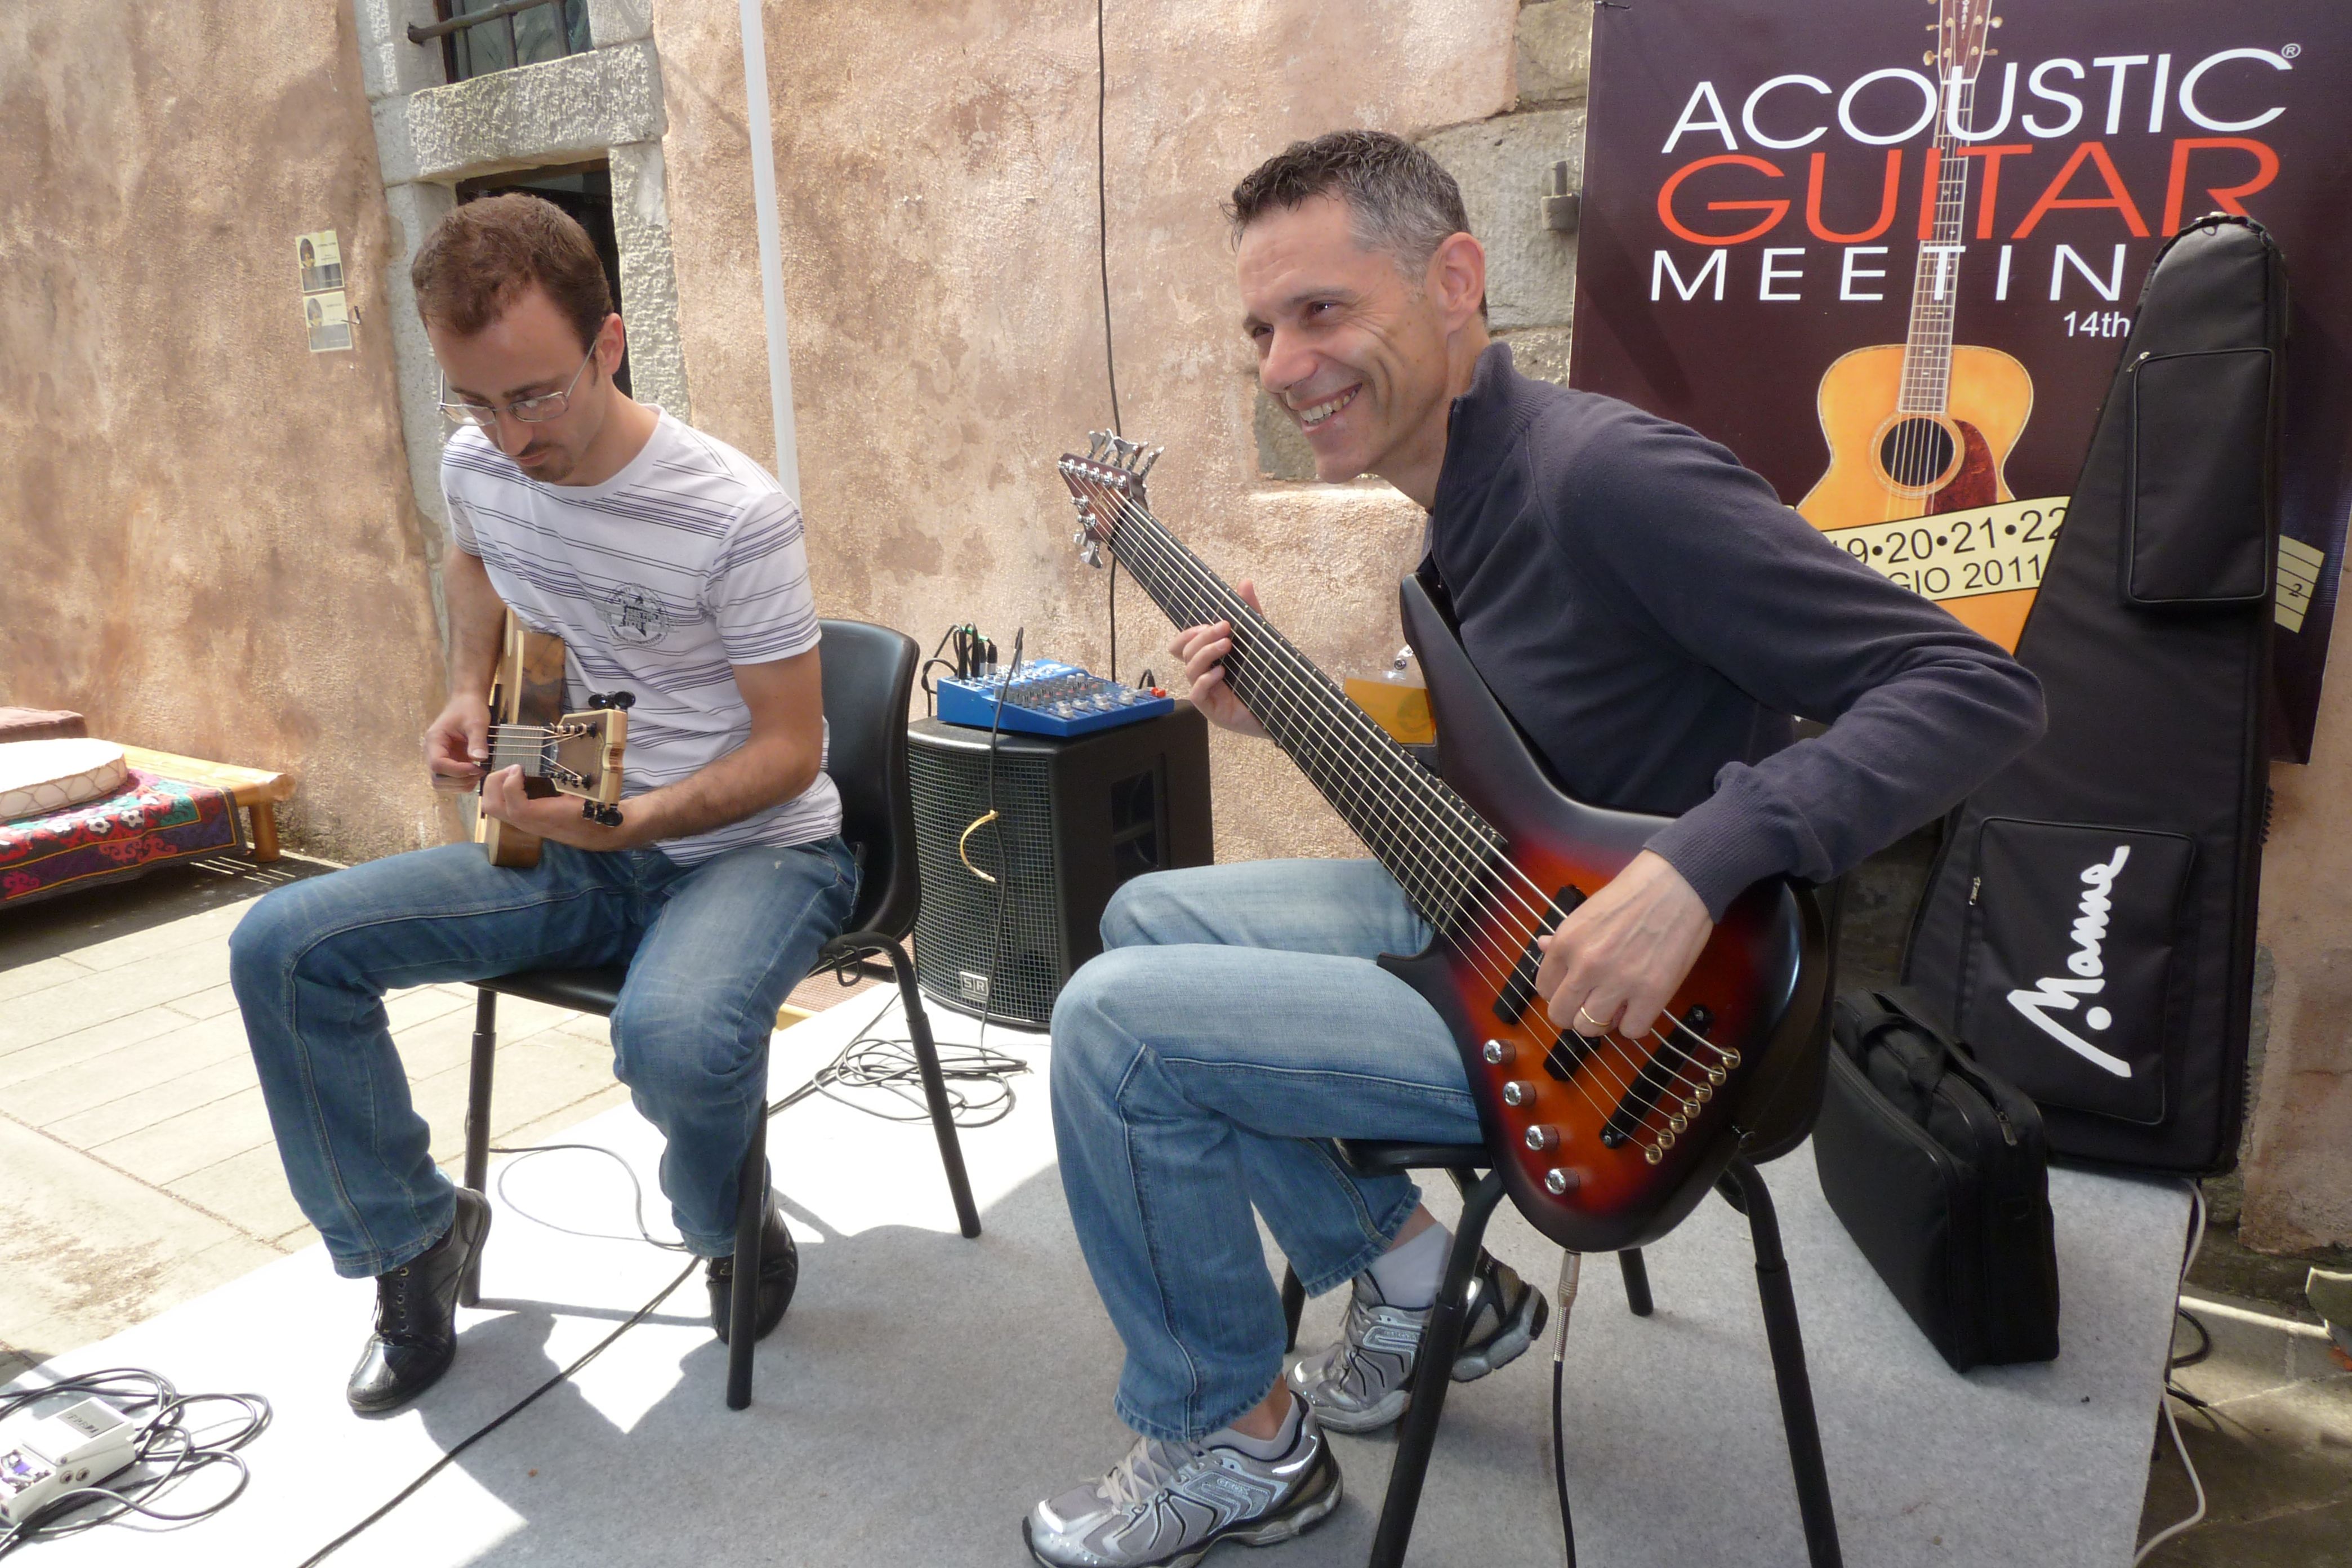 Acoustic Guitar meeting con Manne G.